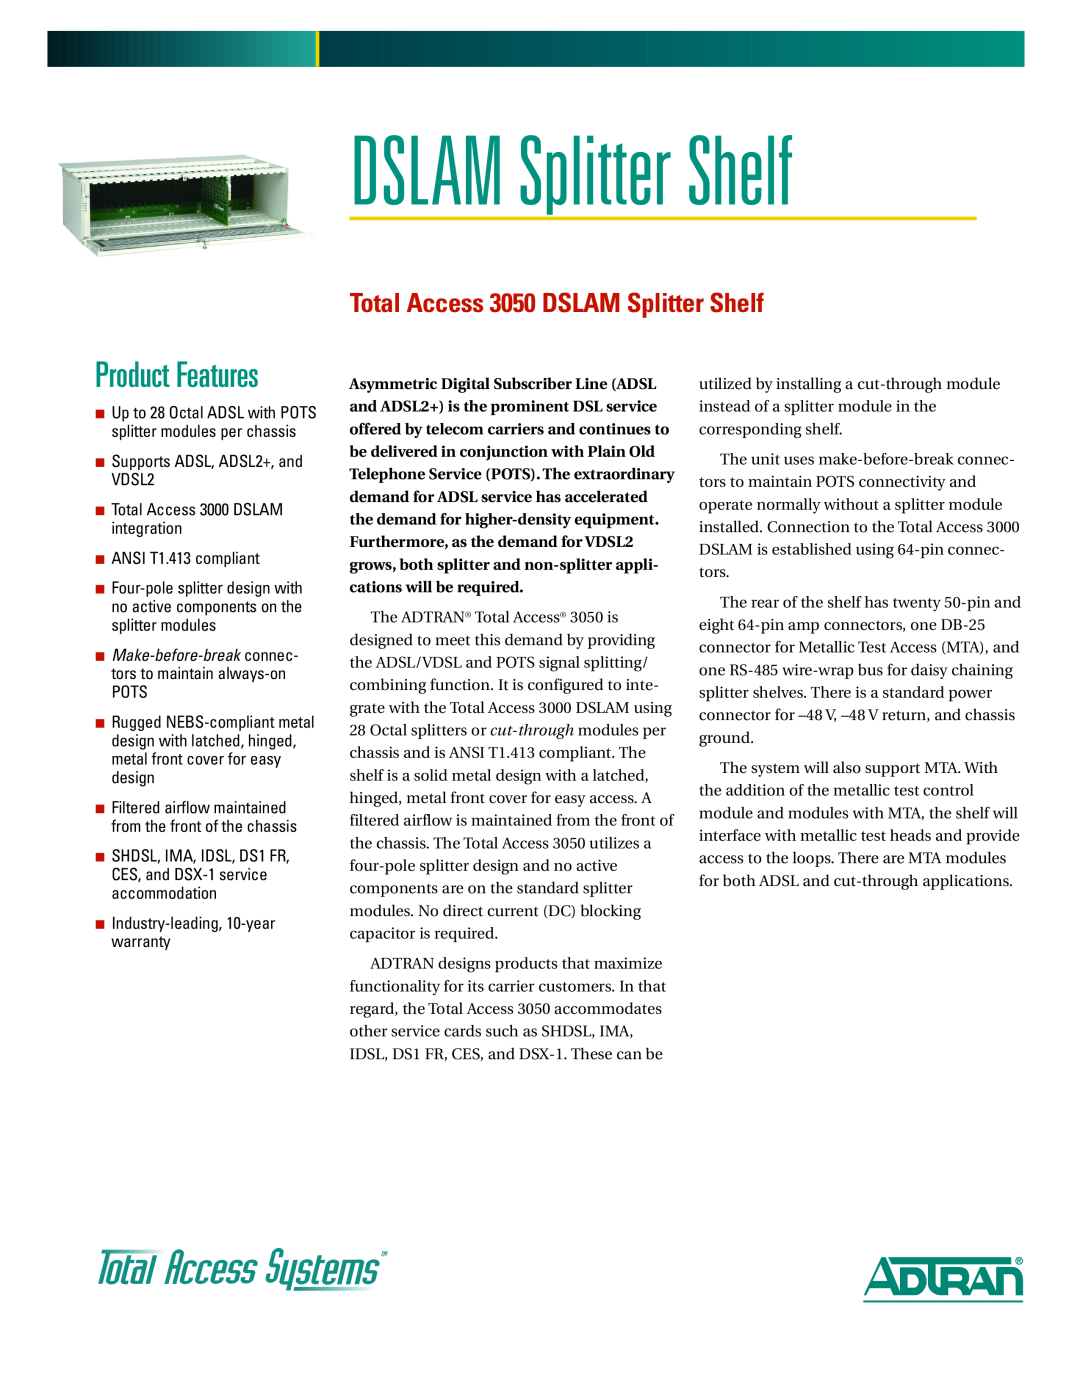 ADTRAN warranty Total Access 3050 DSLAM Splitter Shelf, Product Features, ANSI T1.413 compliant, Pots 